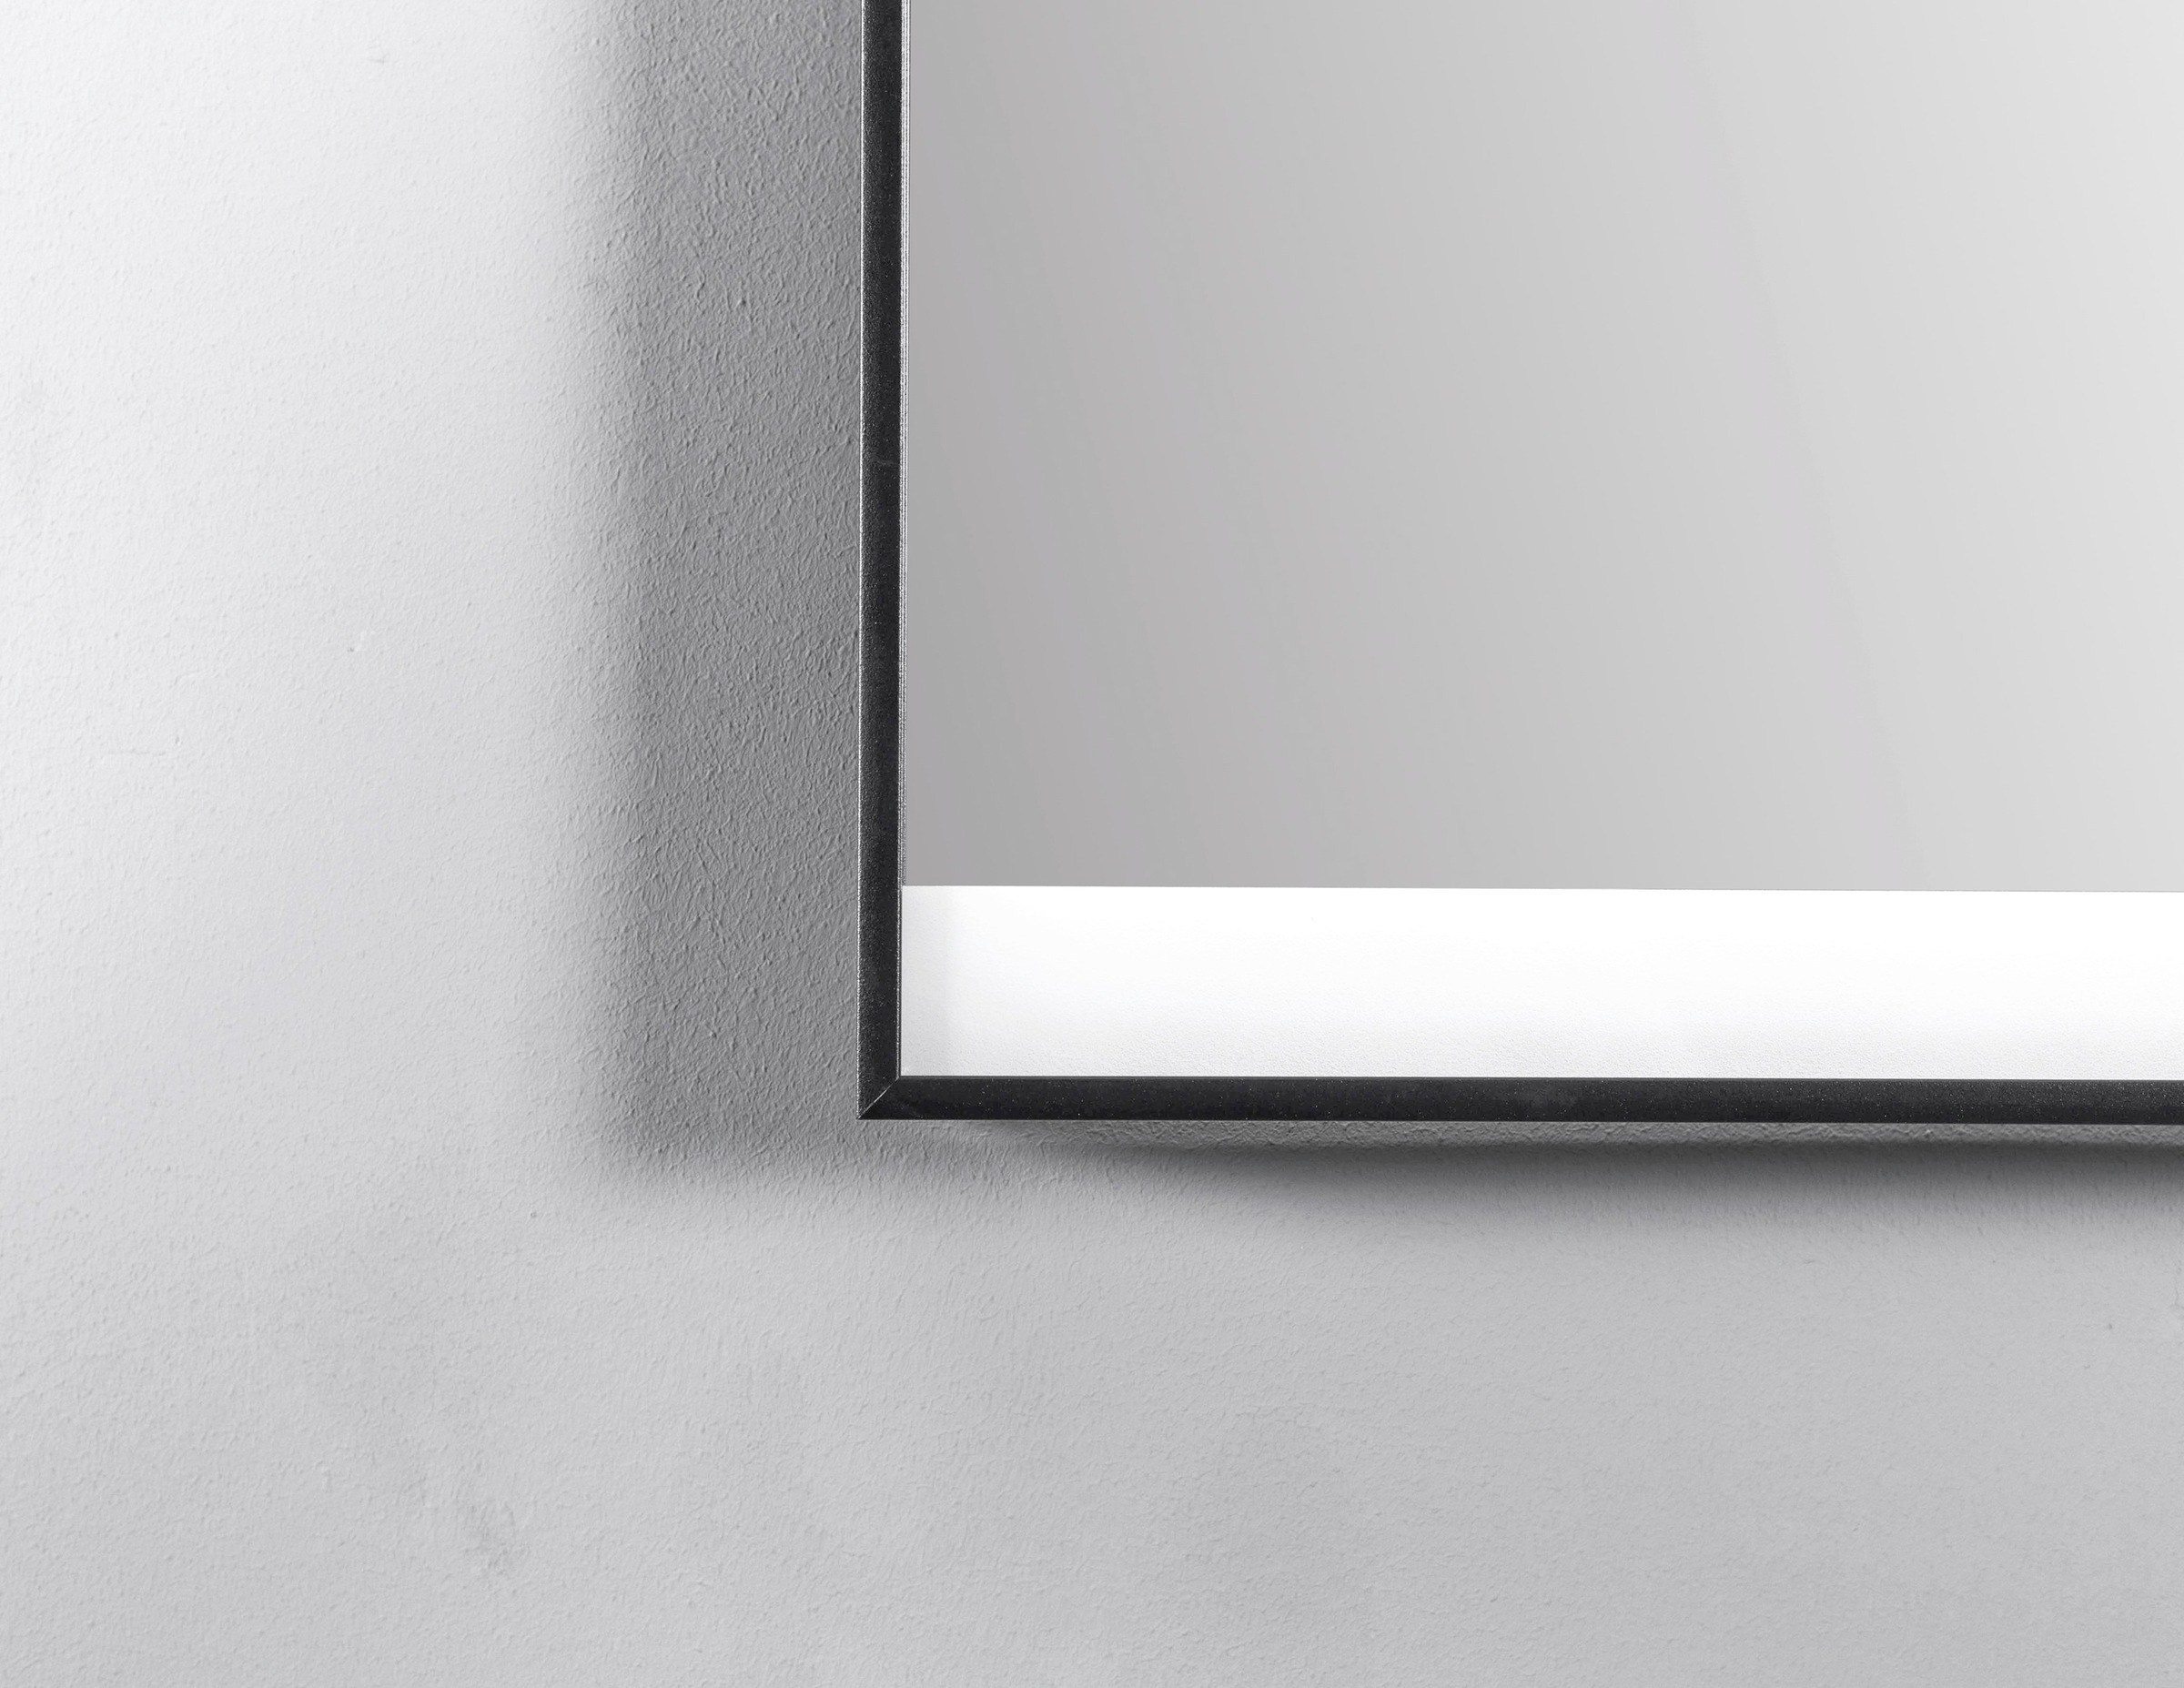 Talos Badspiegel »BLACK SHINE«, (Komplett-Set), BxH: 80x60 cm, energiesparend